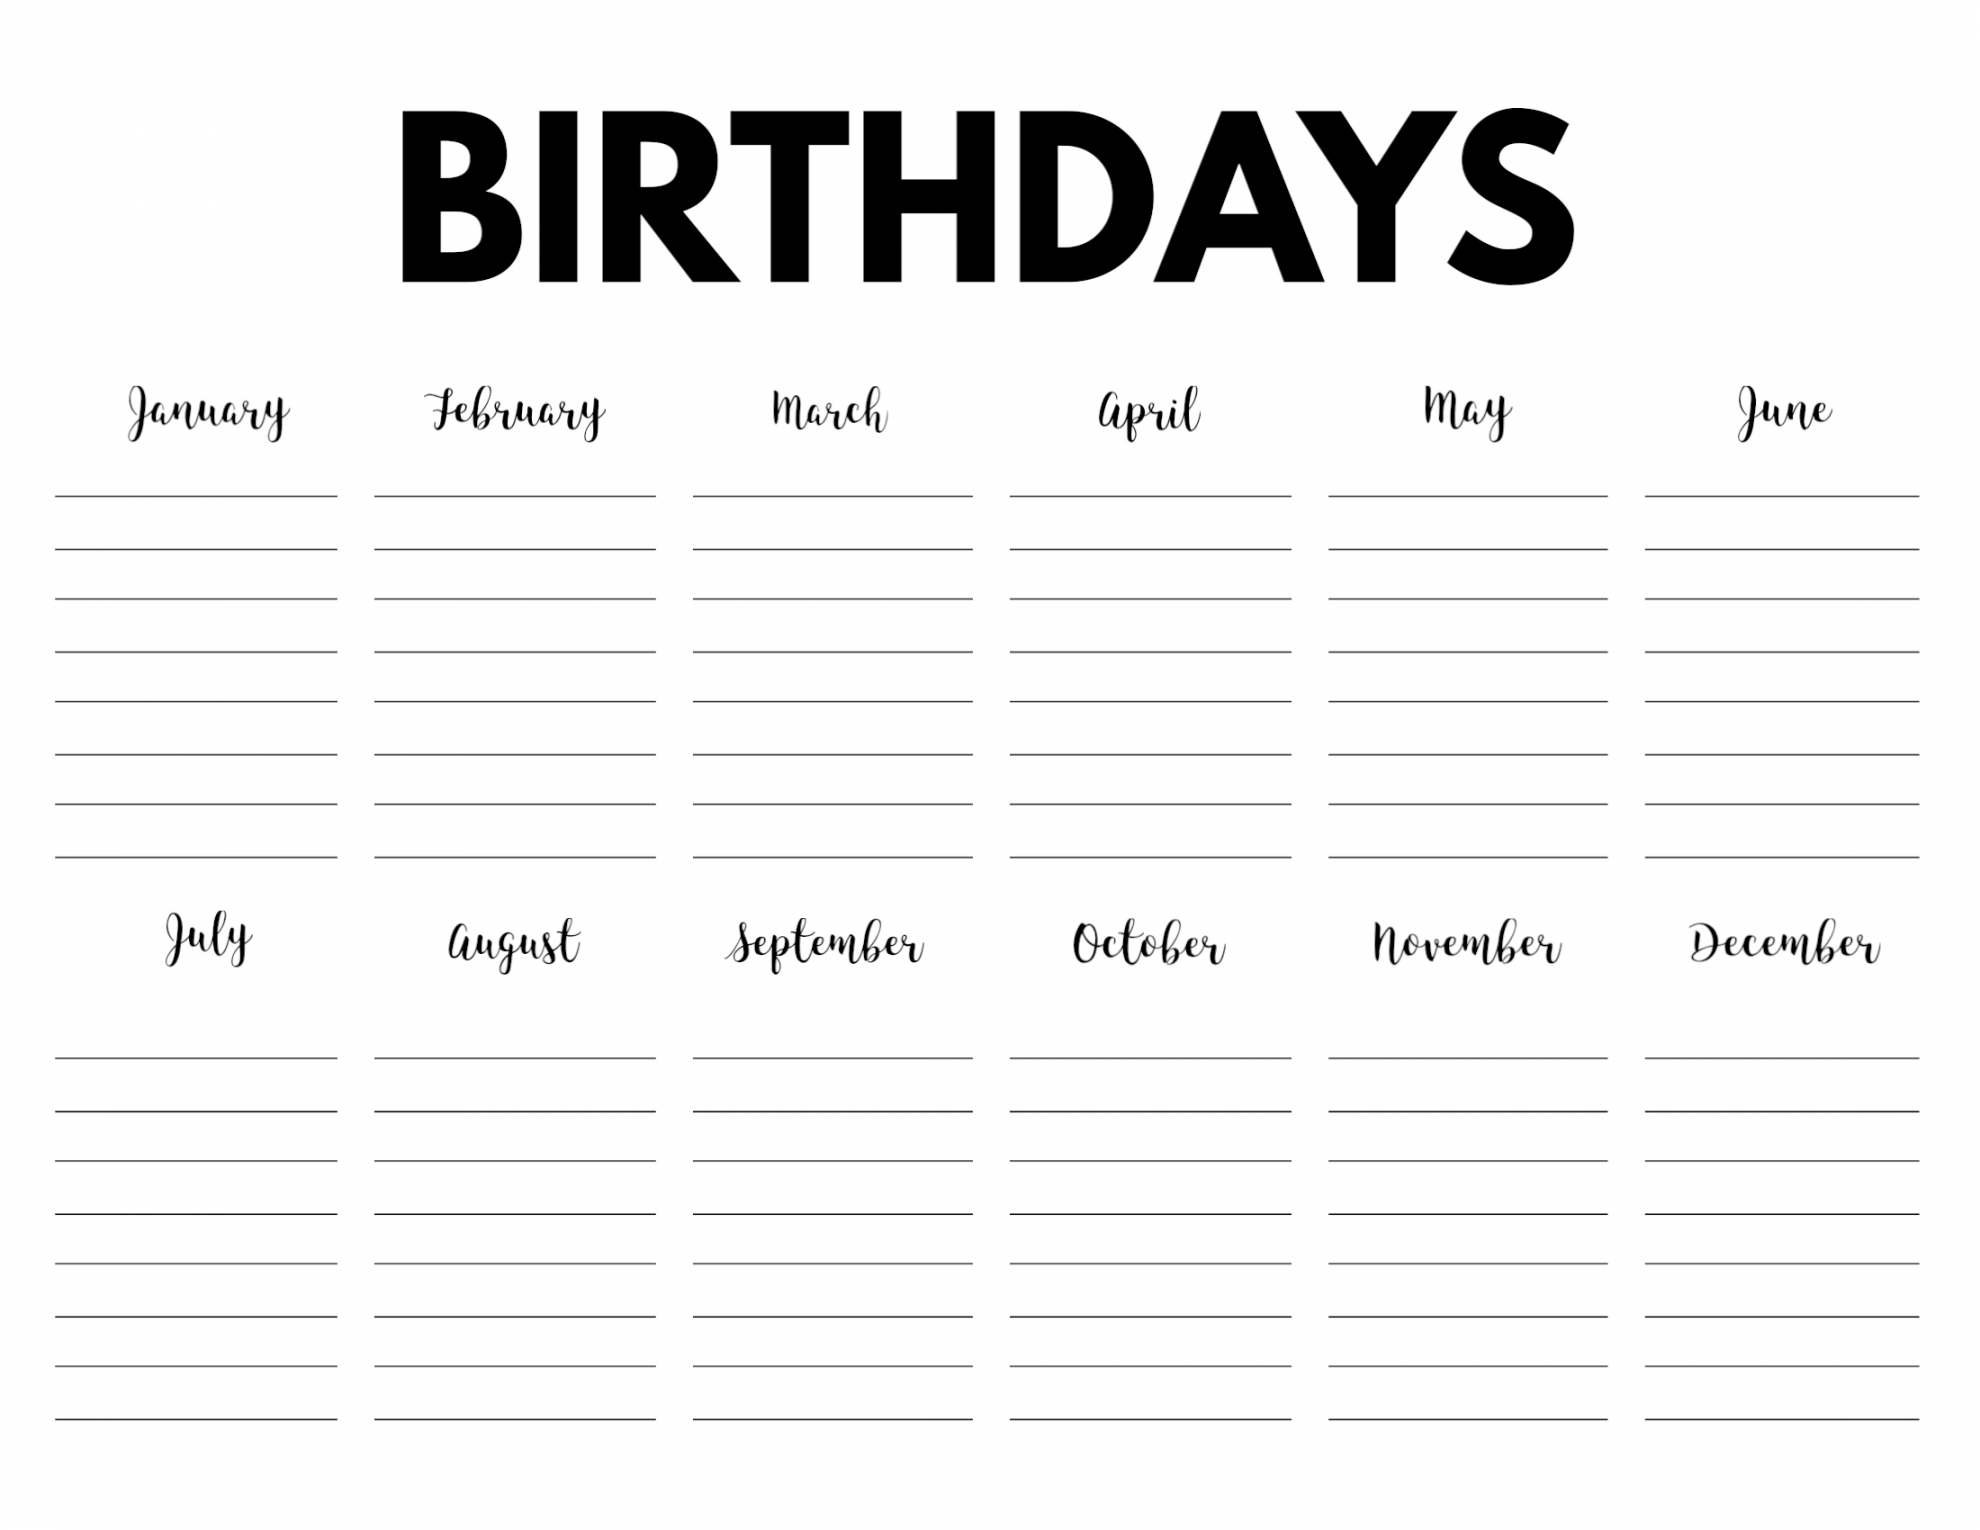 Free Printable Birthday Calendar Template - Paper Trail Design